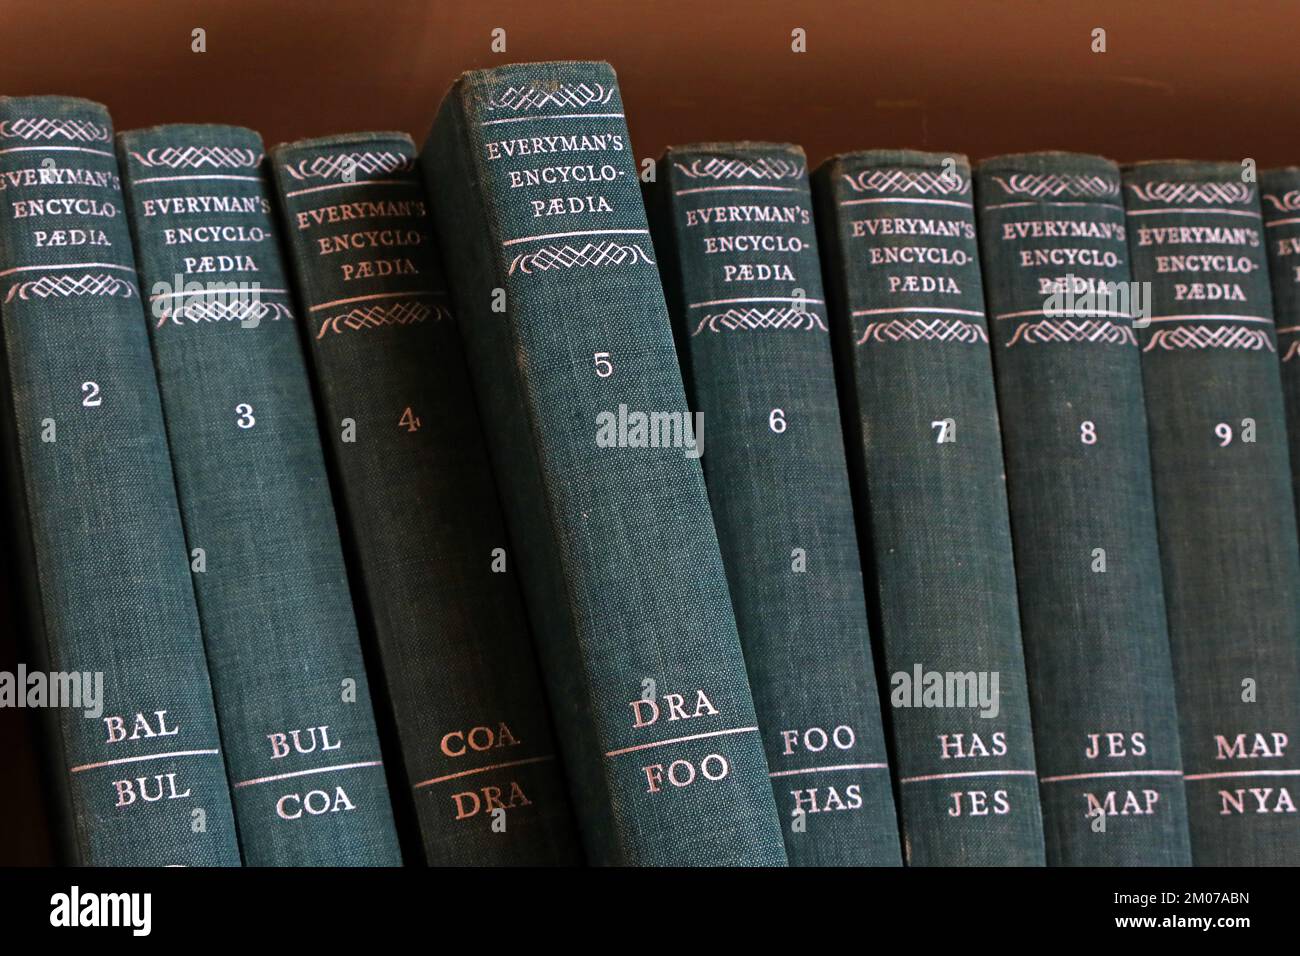 Volumes, Bookshelf of Everymans Encyclopaedia books Stock Photo